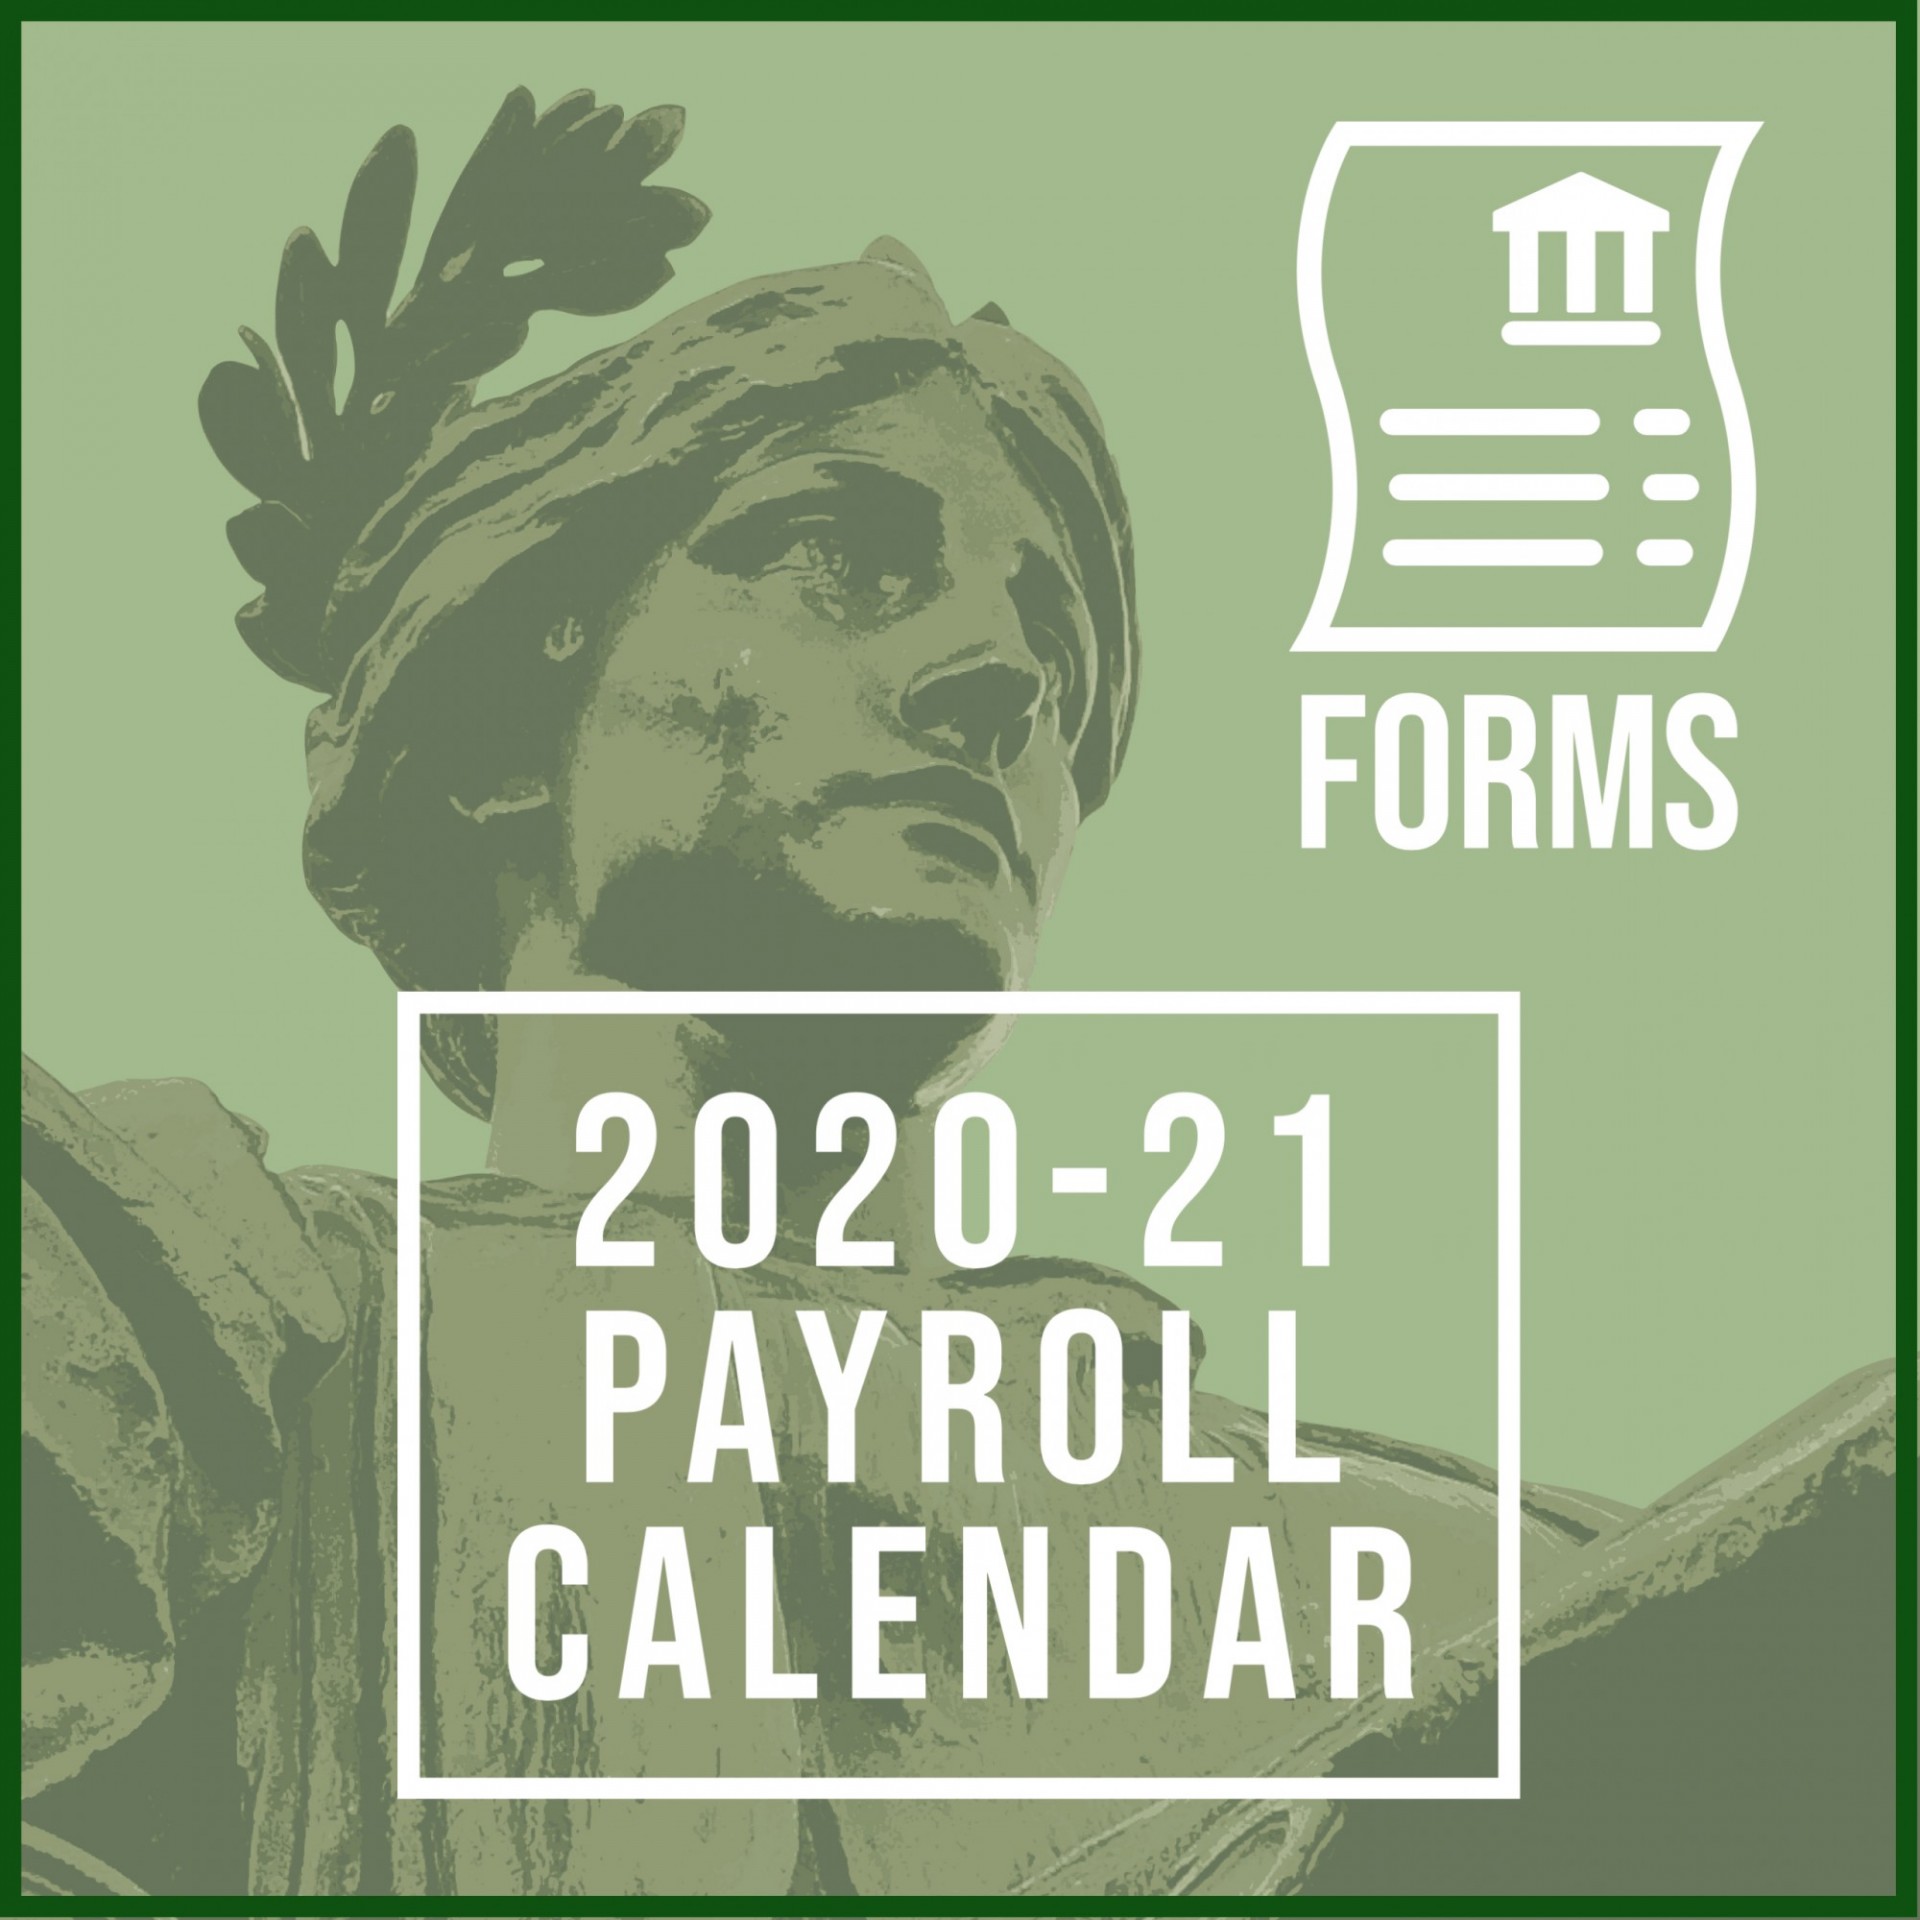 Forms Icon: 2020-21 Payroll Calendar